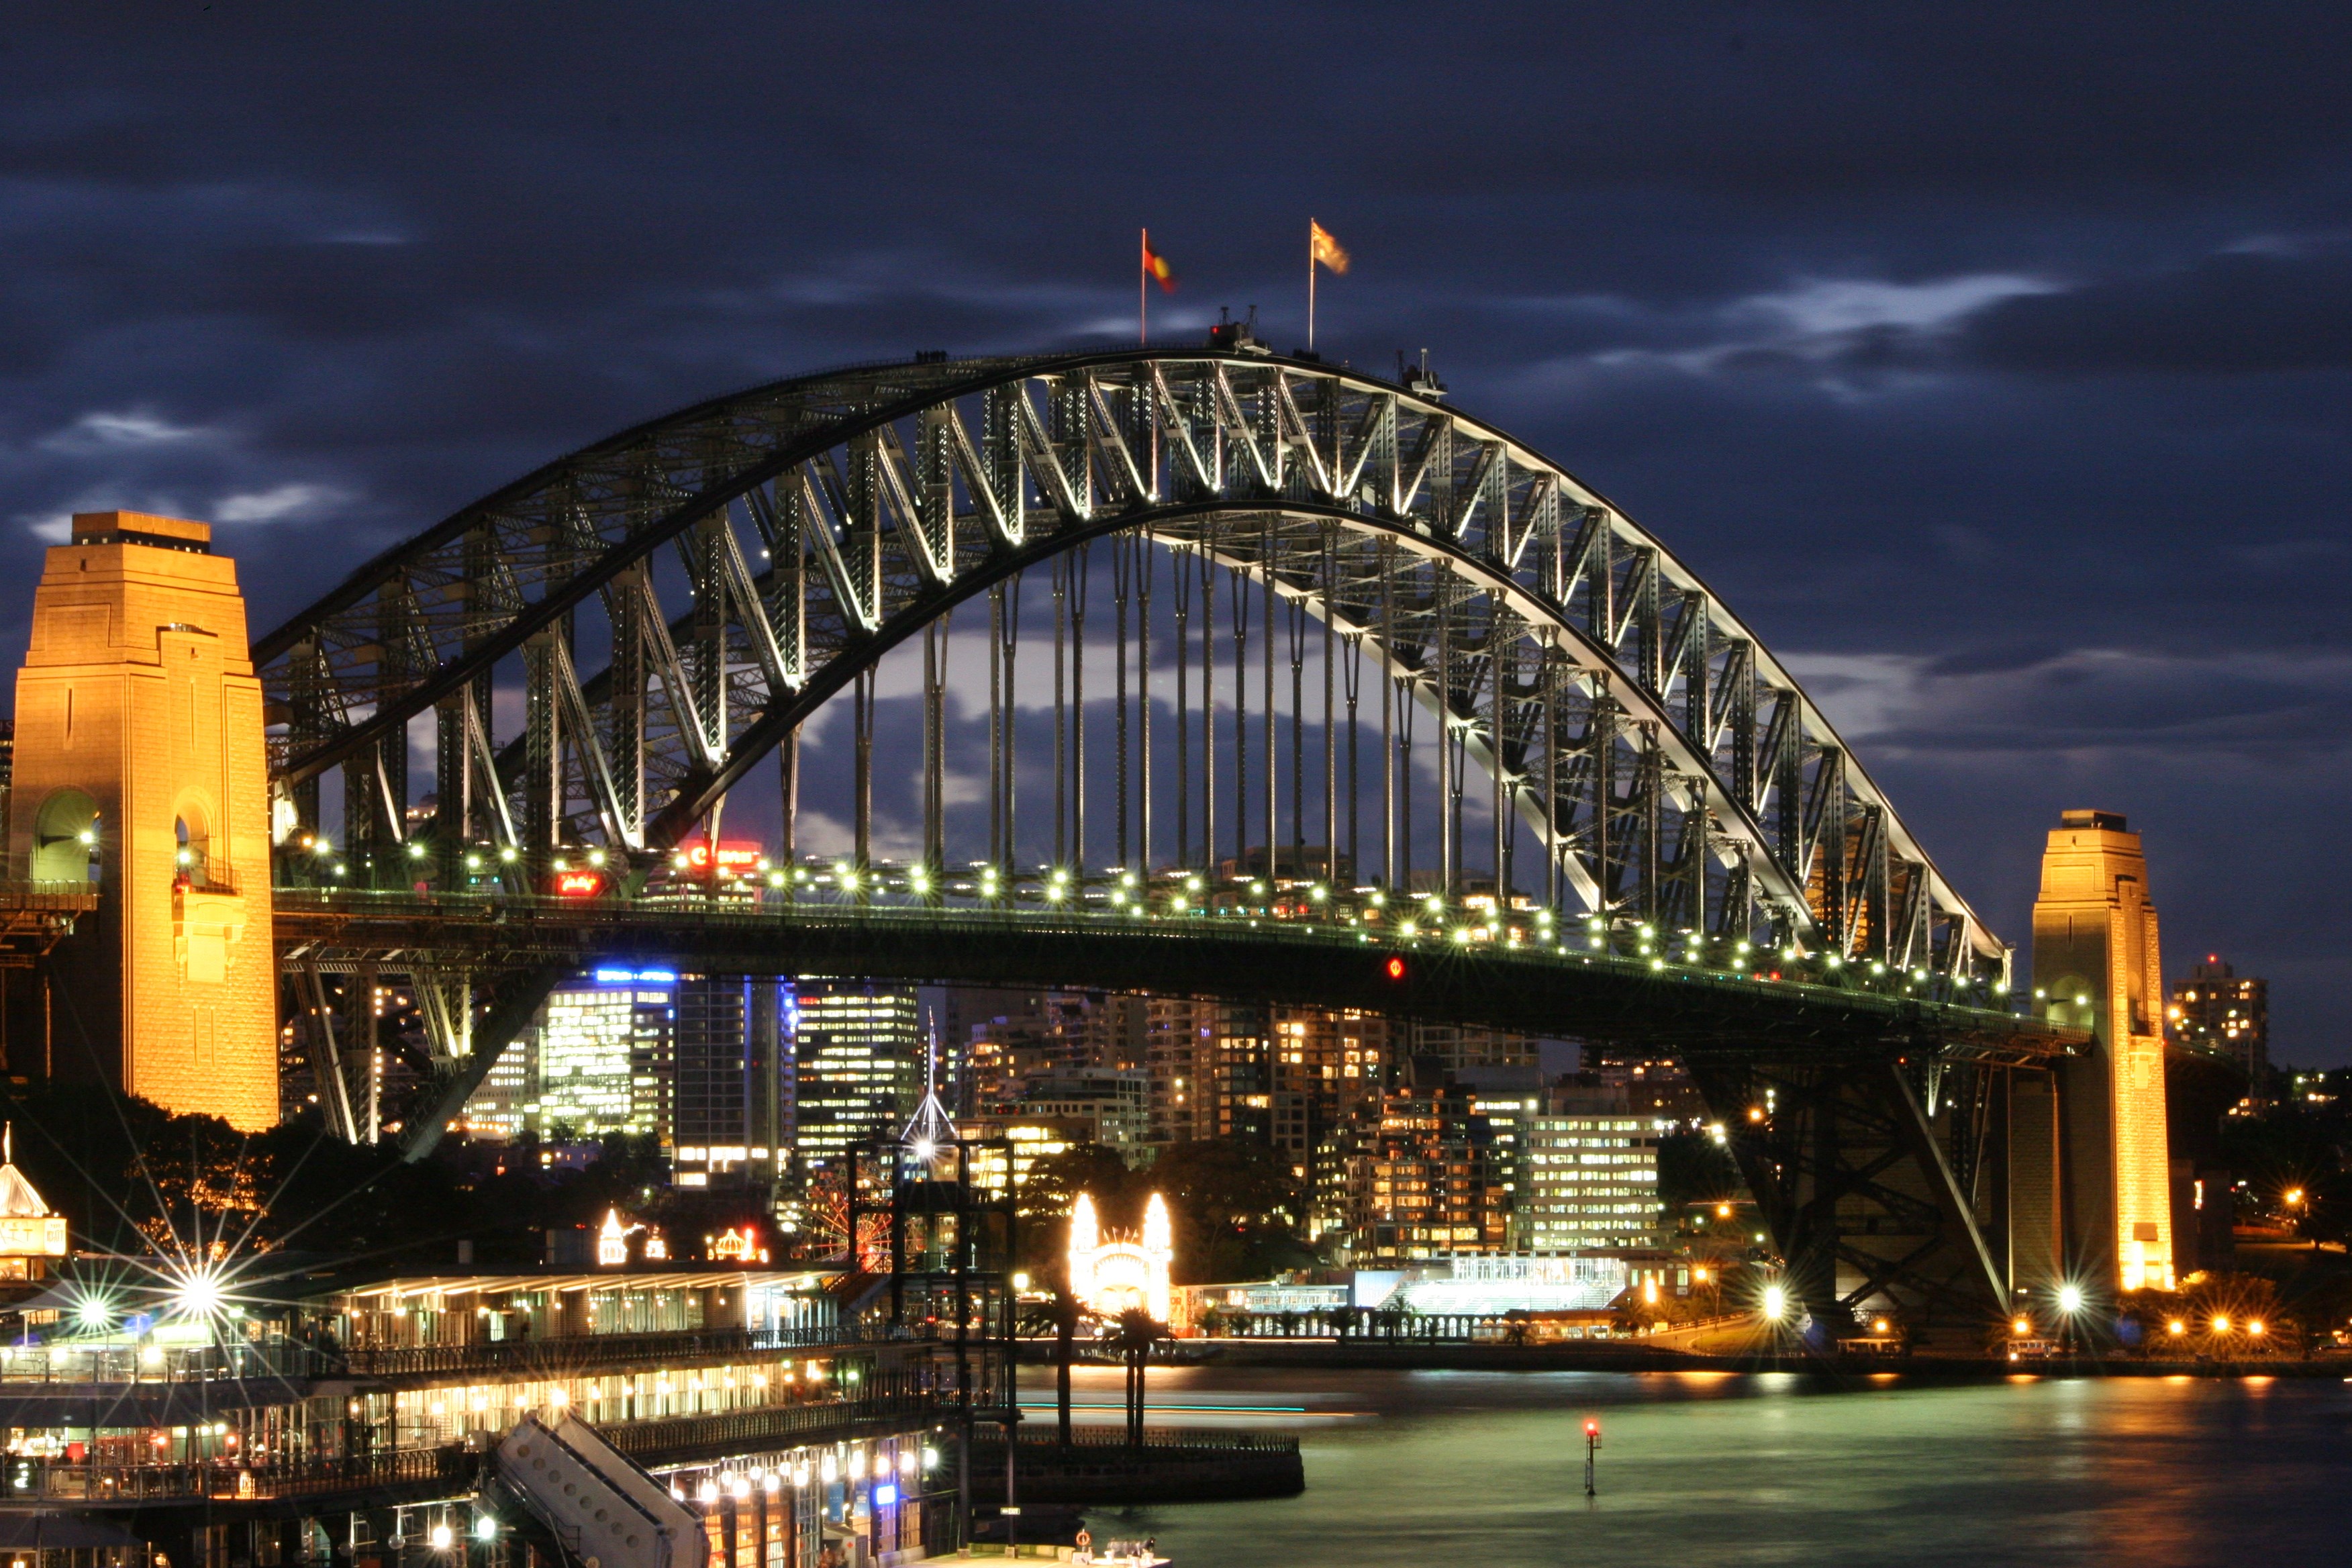 Harbour bridge. Сиднейский мост Харбор-бридж. Мост Харбор бридж в Австралии. Сиднейский Харбор-бридж, Австралия. Сидней мост Харбор-бридж фото.